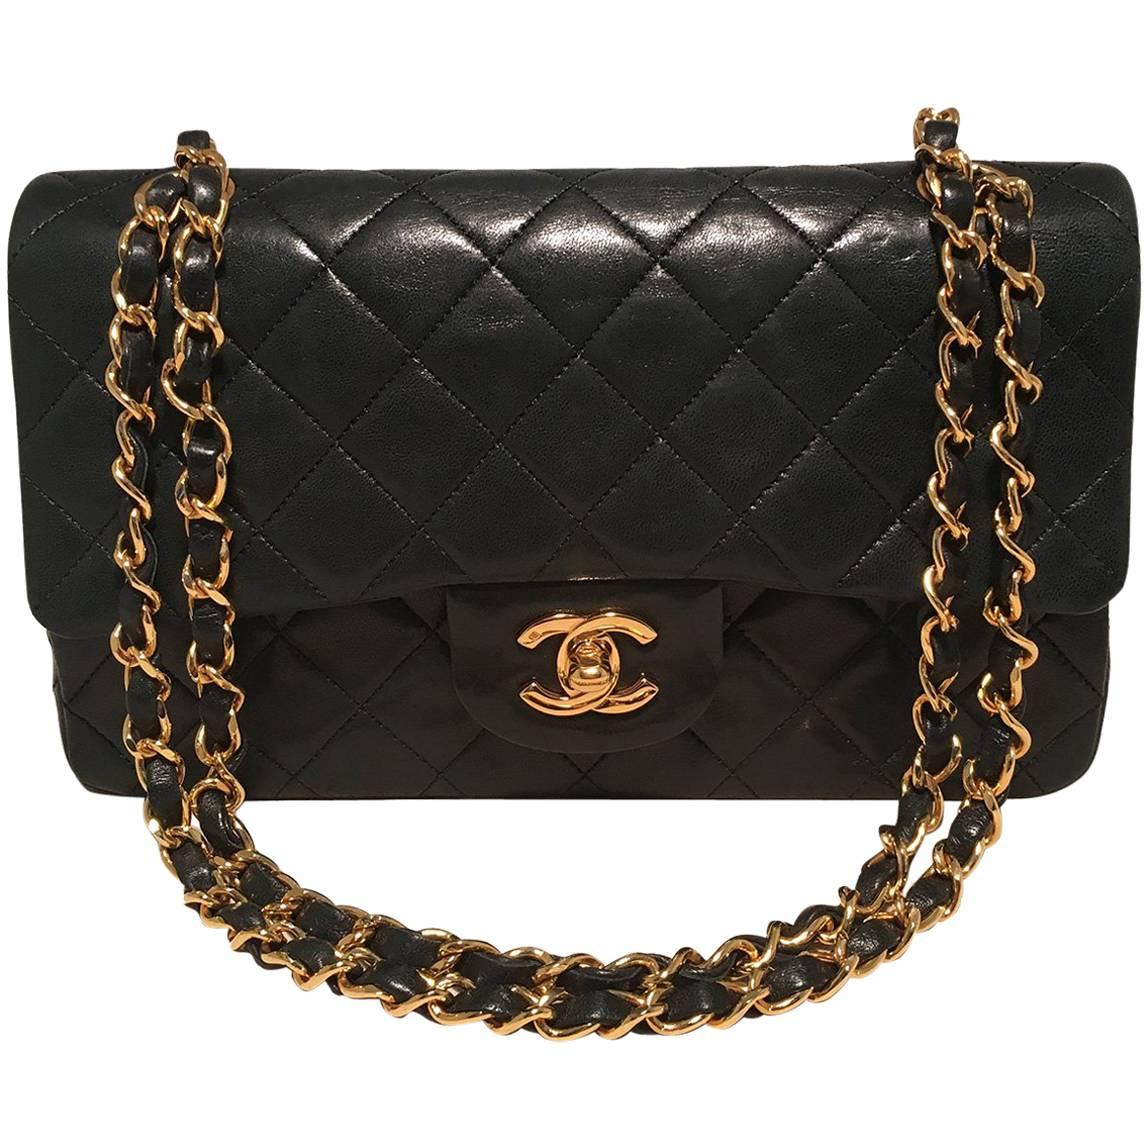 Chanel Black Leather 9 inch 2.55 Double Flap Classic Shoulder Bag